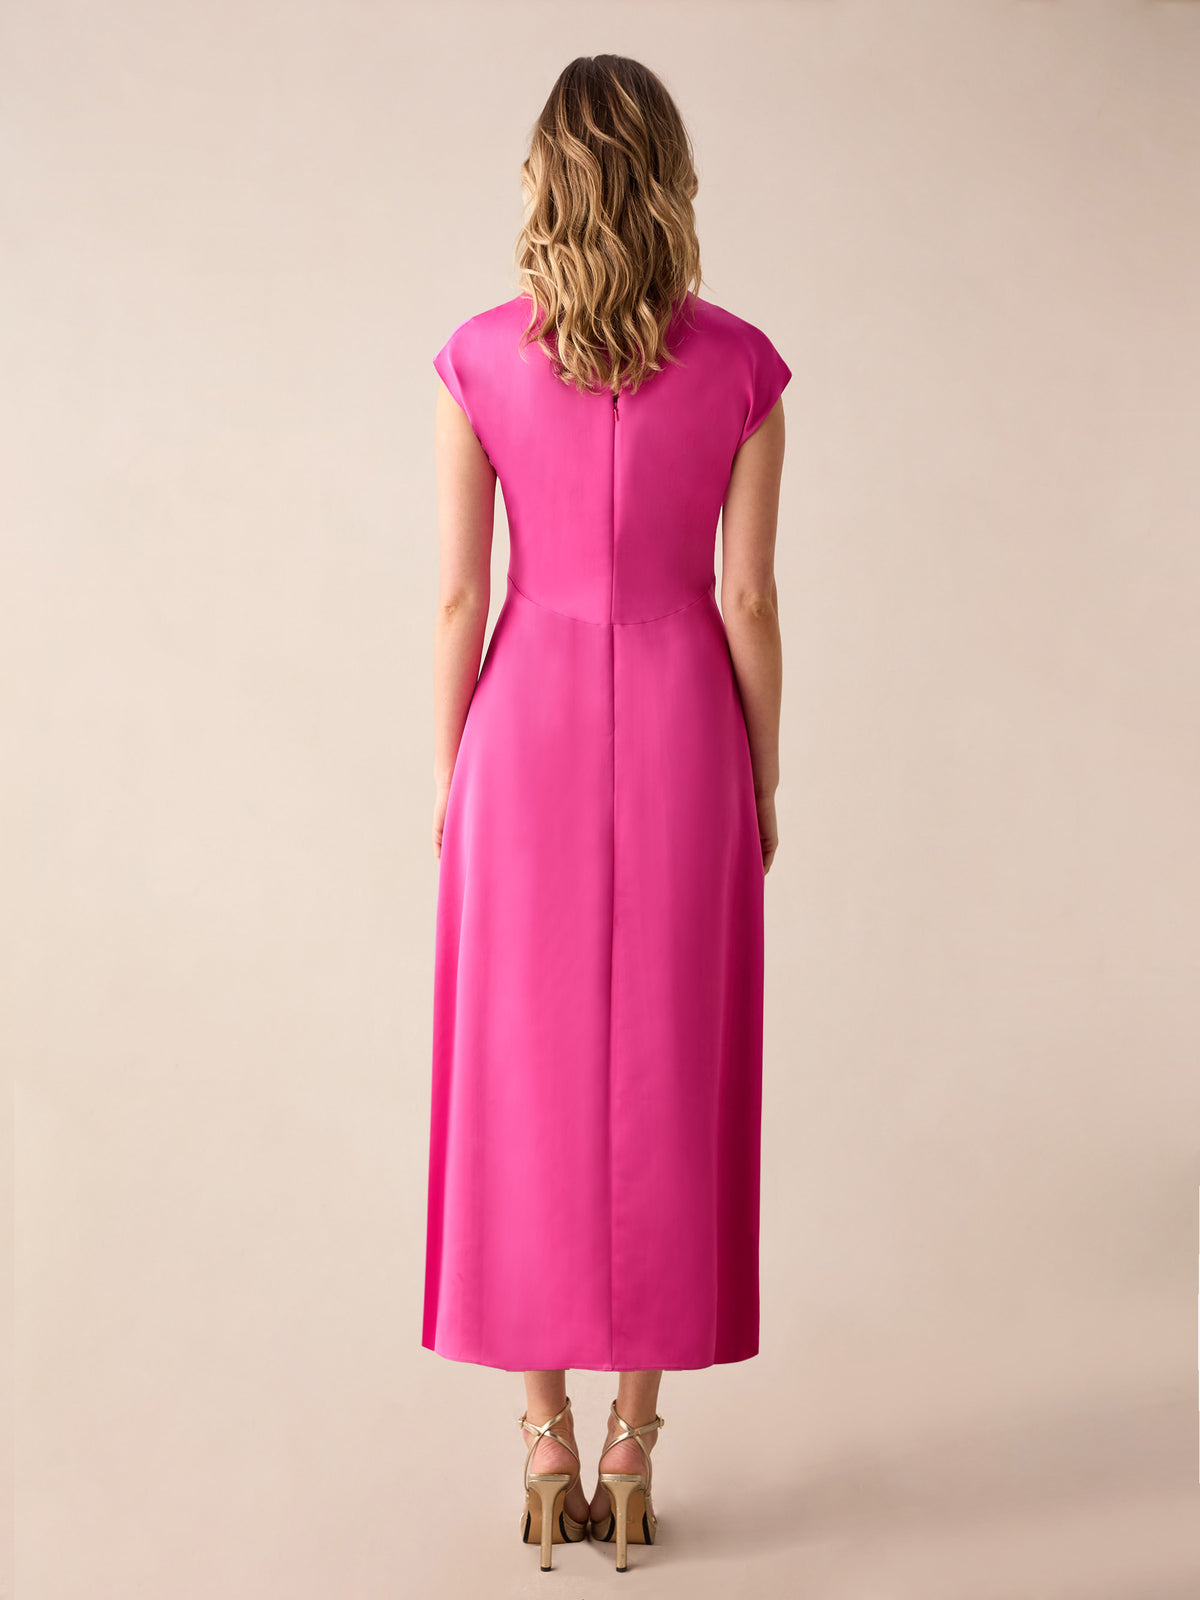 Arabella Pink Satin Keyhole Front Dress